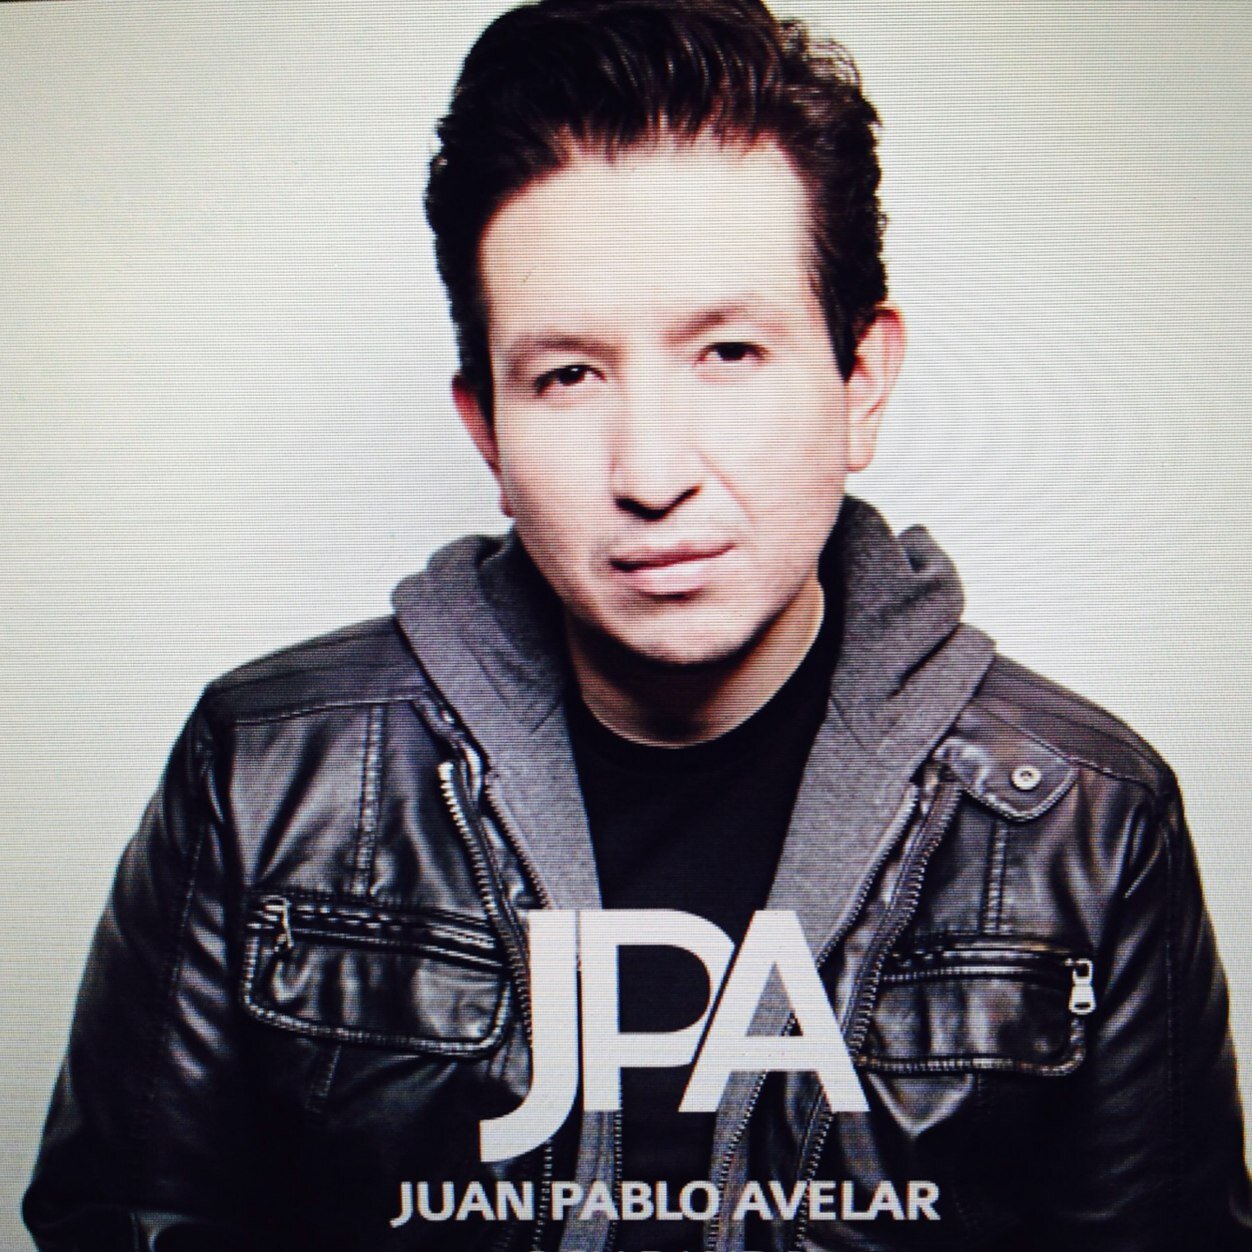 Juan Pablo Avelar